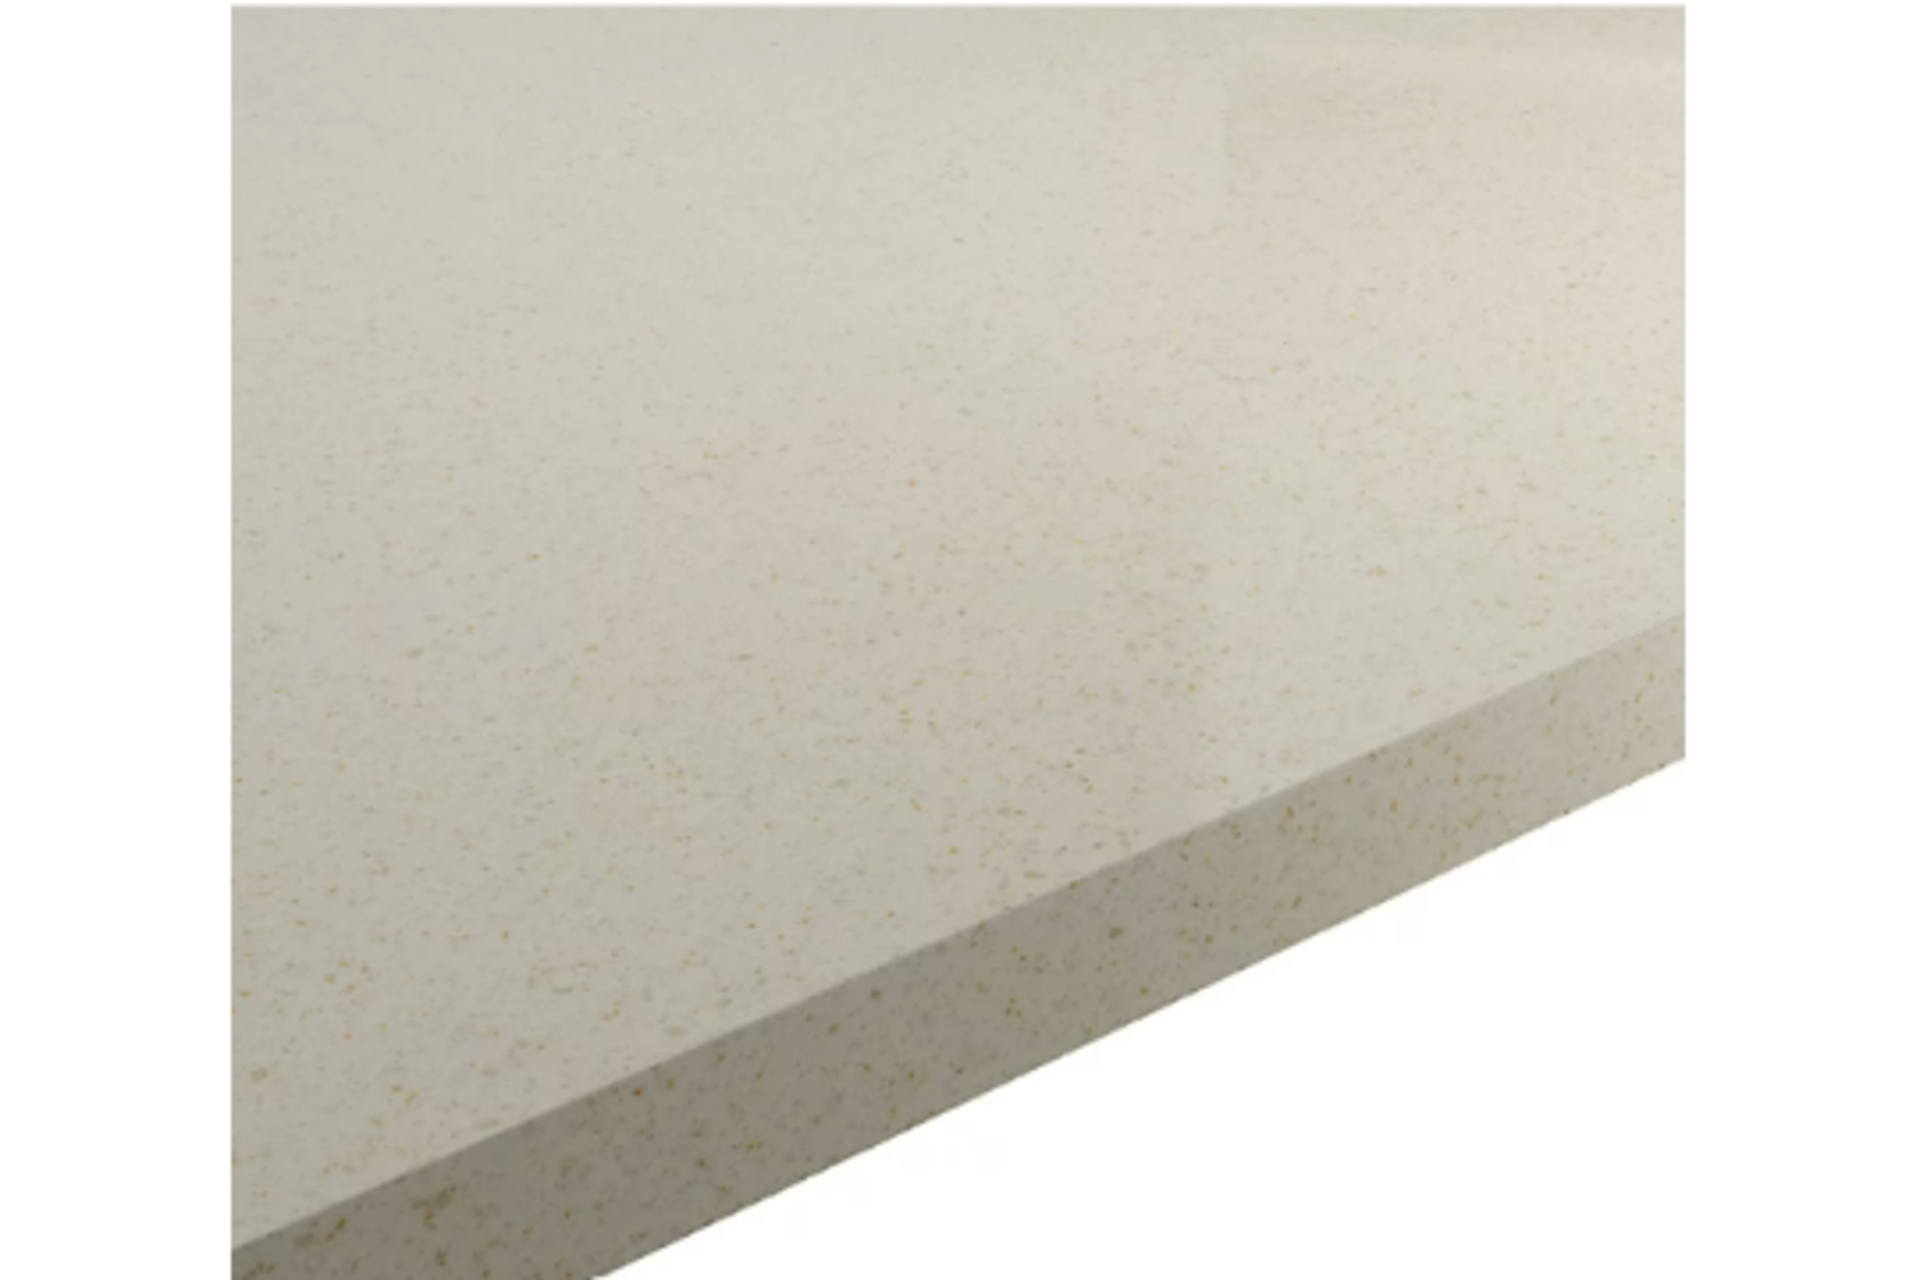 3 X New & Packaged HI-MACS 20mm Matt Sand beige Stone effect Acrylic Square edge Kitchen Worktop. - Image 4 of 4